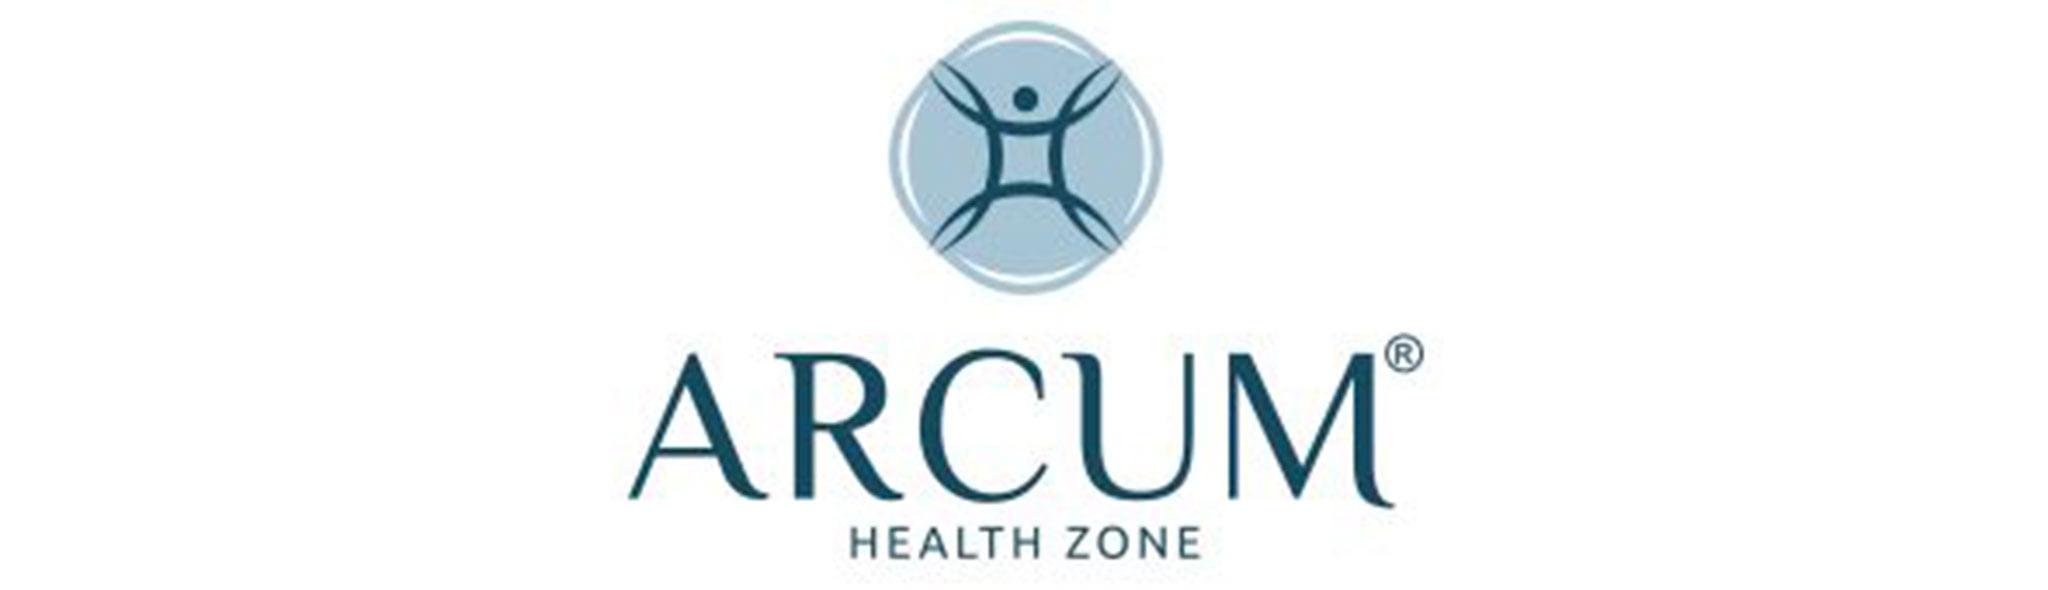 Logotipo Arcum Health Zone